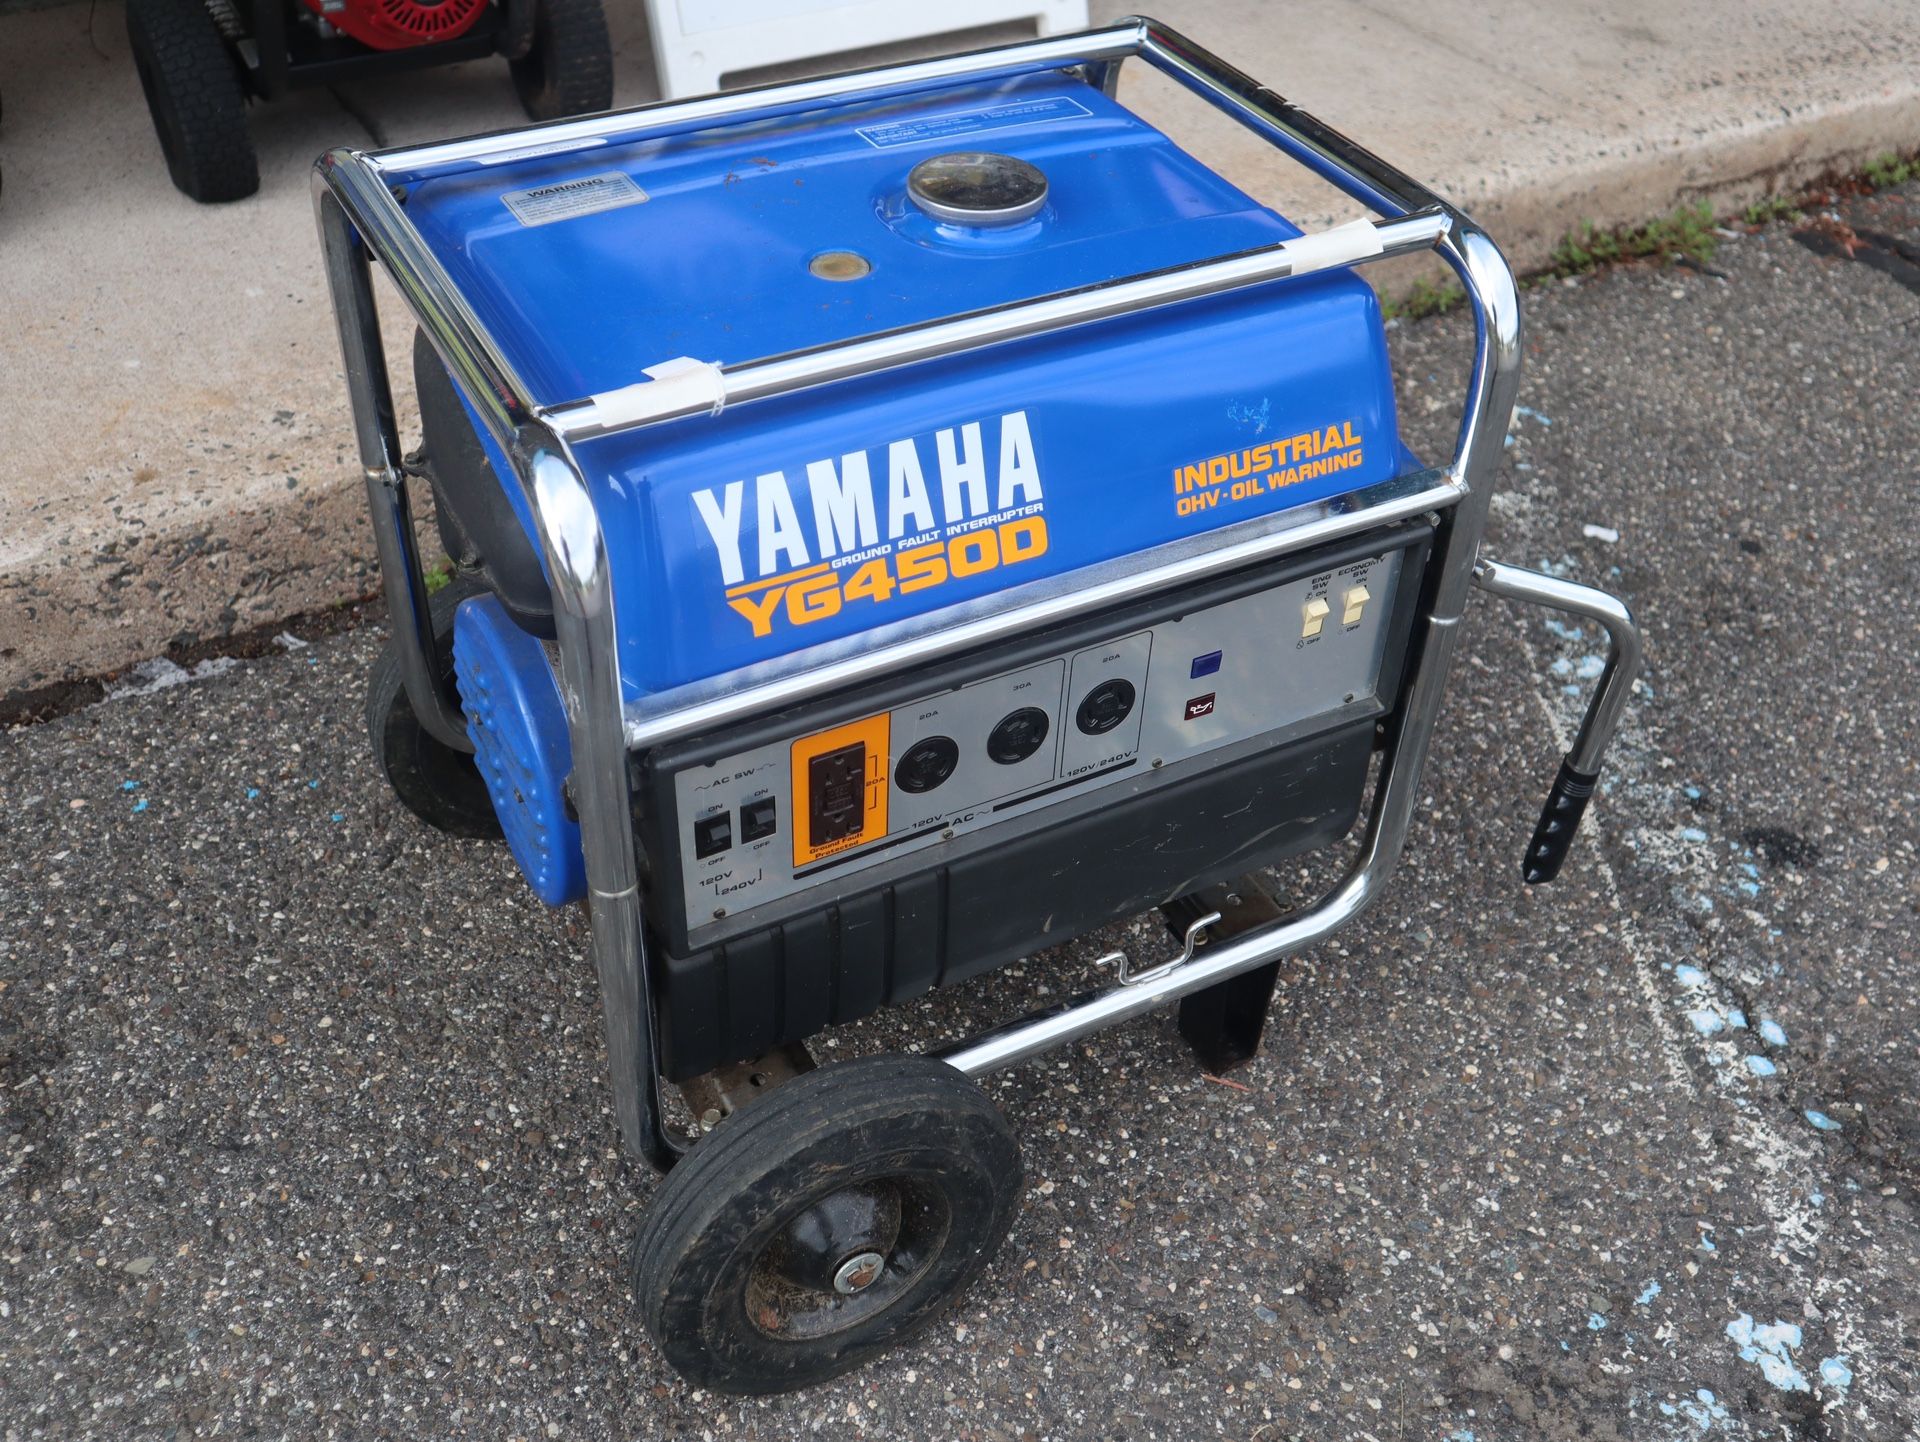 Yamaha YG4(contact info removed)watt Portable Generator